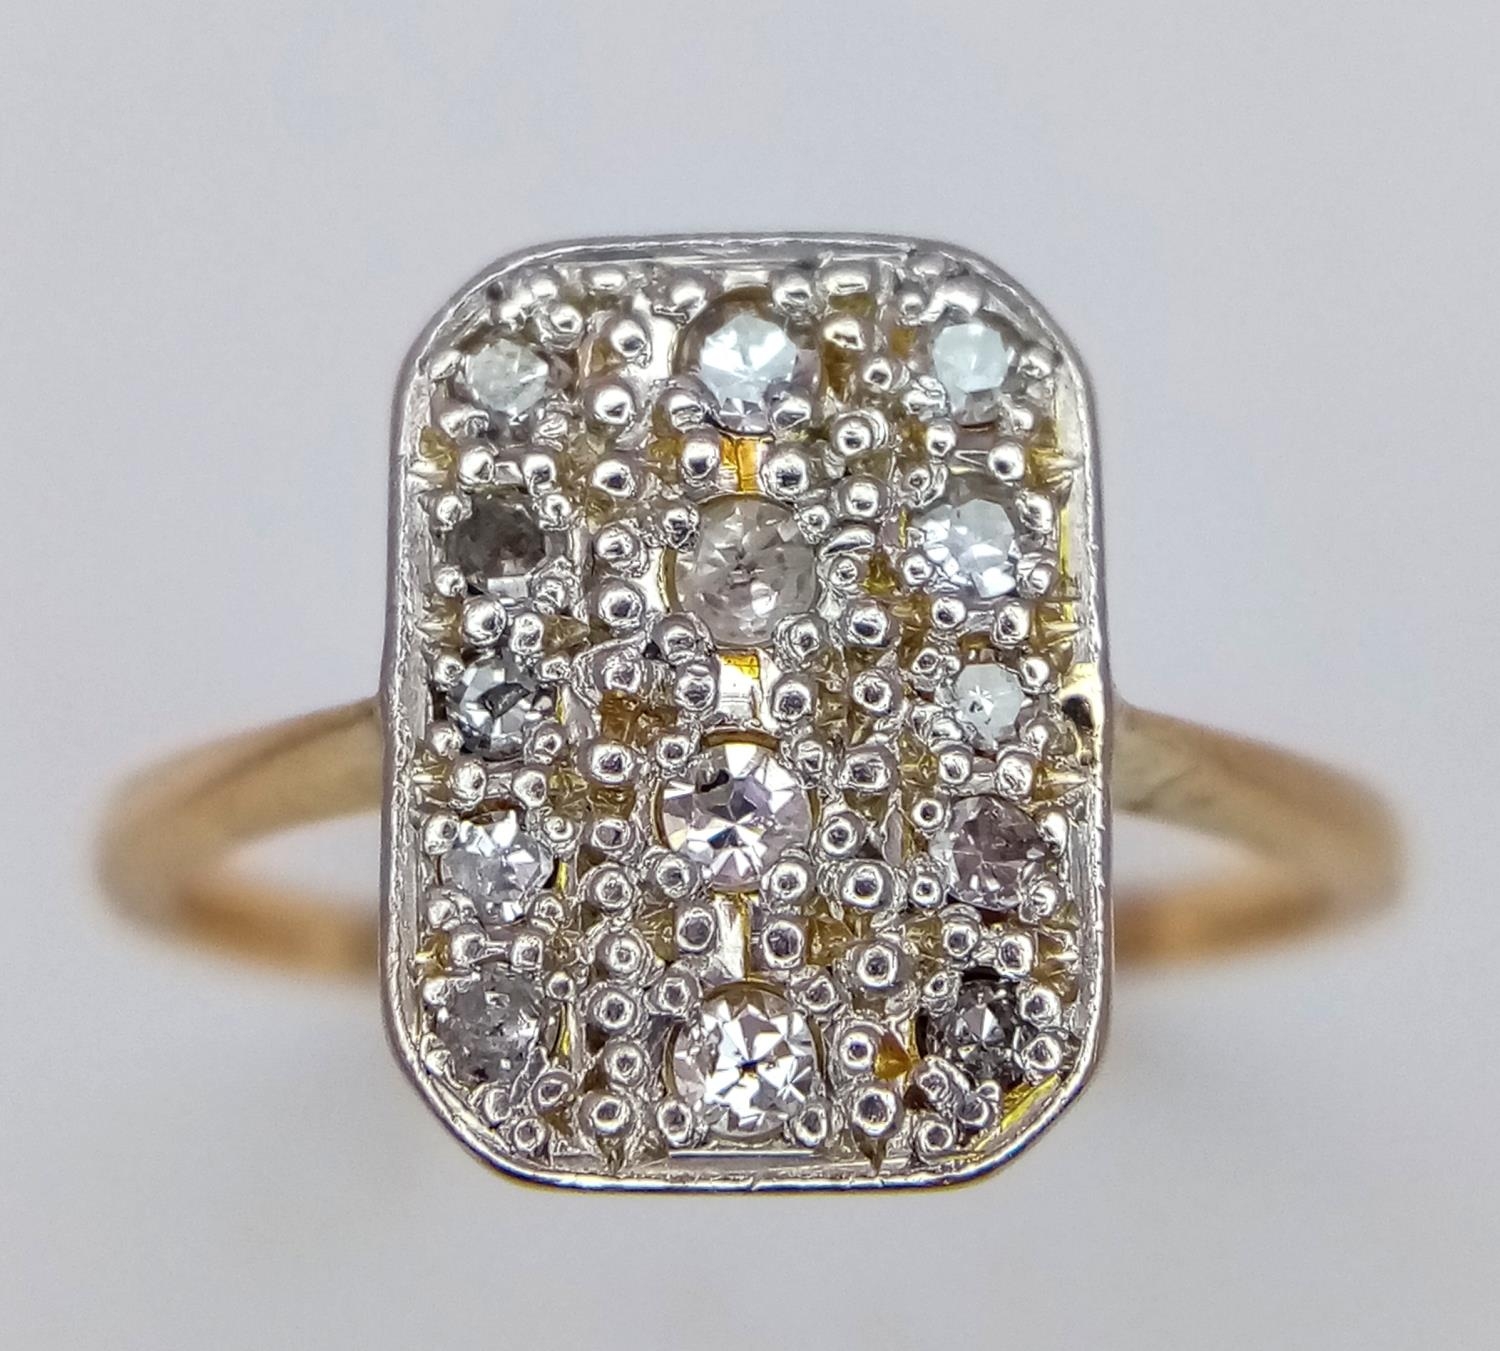 AN 18K YELLOW GOLD & PLATINUM VINTAGE DIAMOND RING. 0.20ctw, size J, 2.6g total weight. Ref: SC 9035